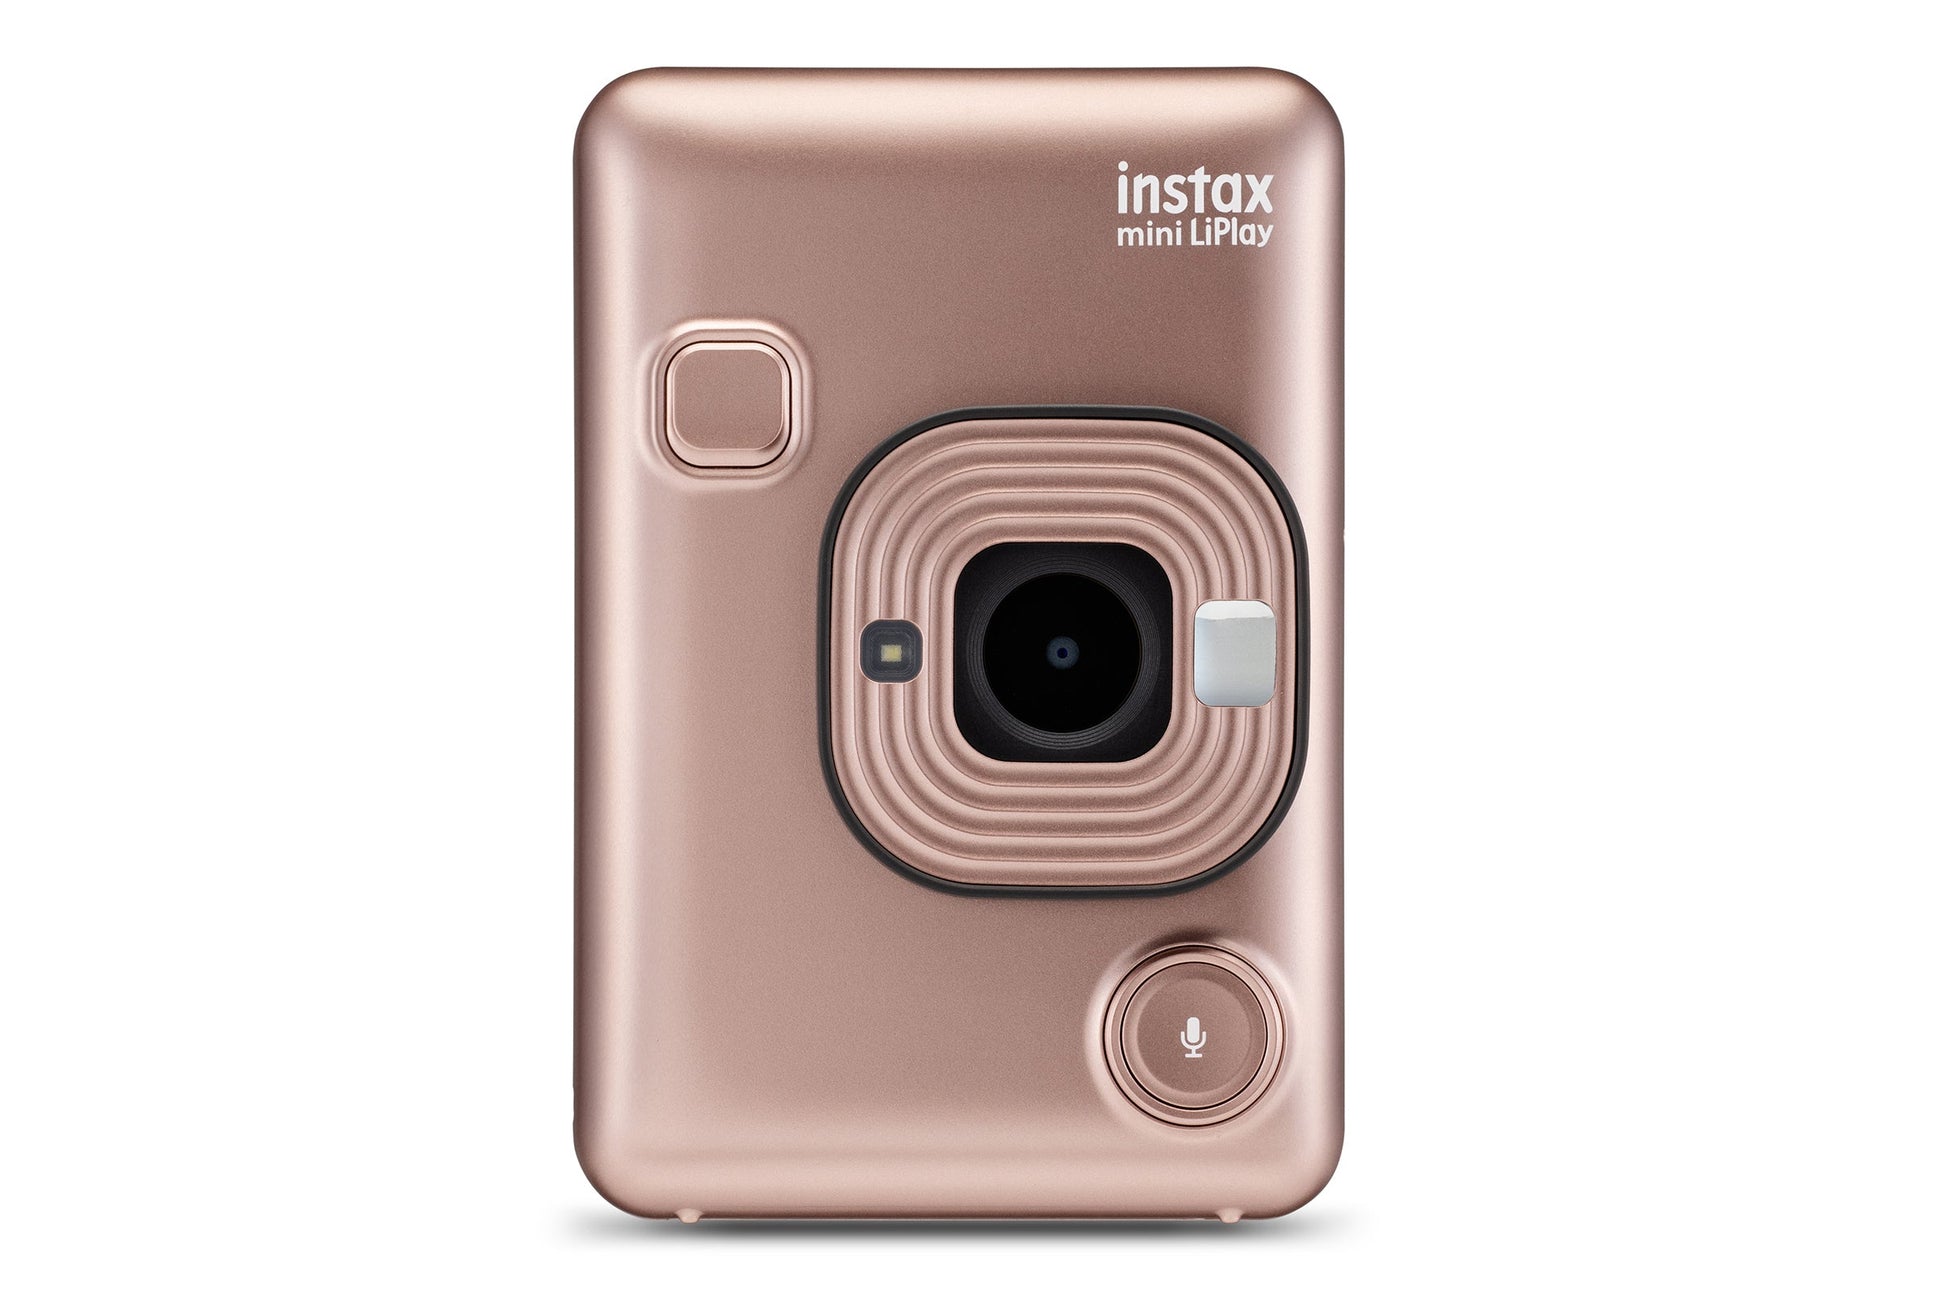 Fujifilm Instax Mini LiPlay Hybrid Instant Camera - Blush Gold